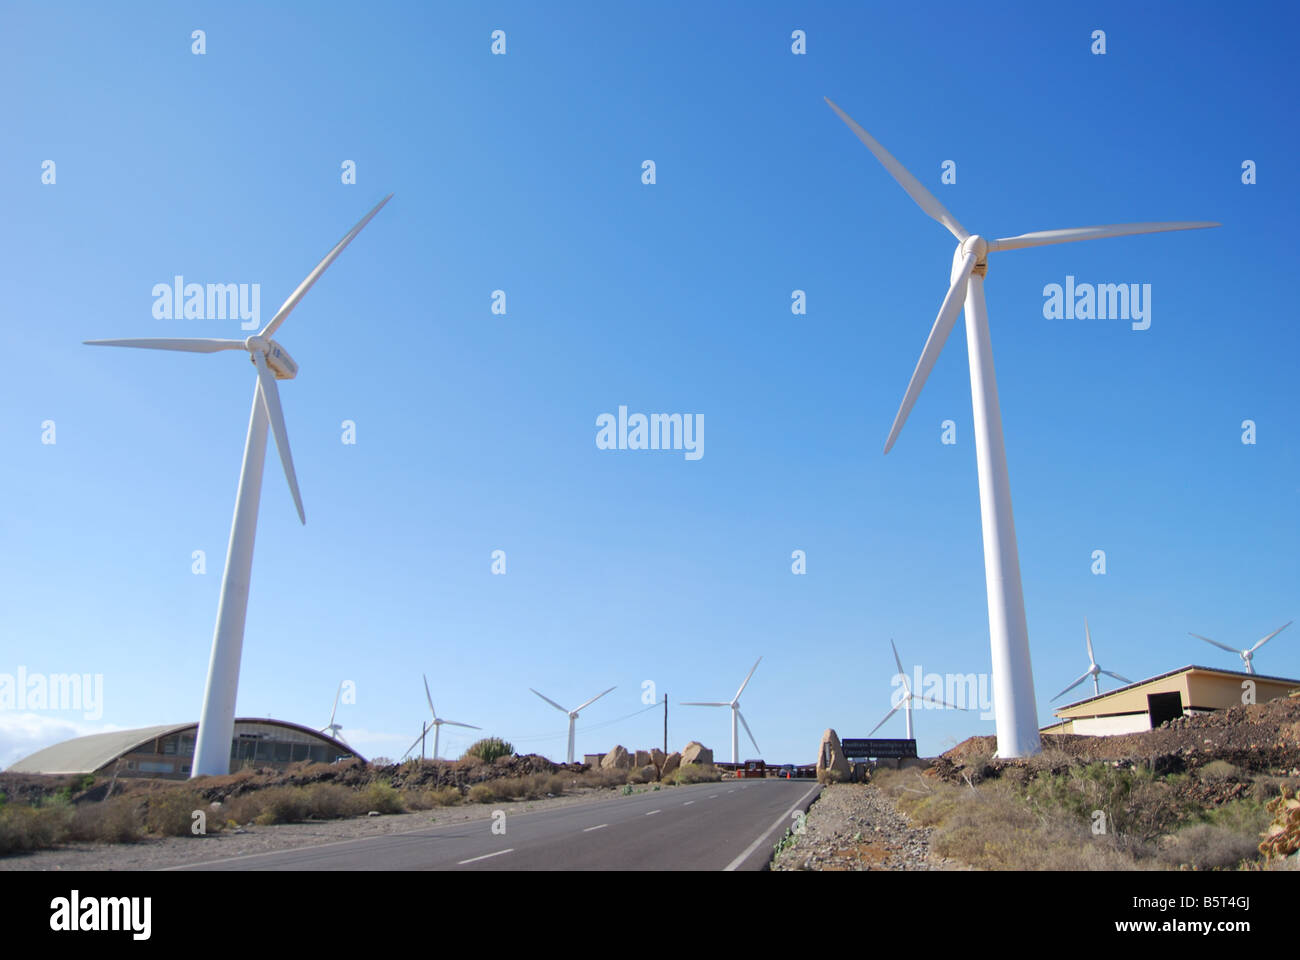 Wind turbines, Parque Eolico entrance, El Medano, Tenerife, Canary Islands, Spain Stock Photo